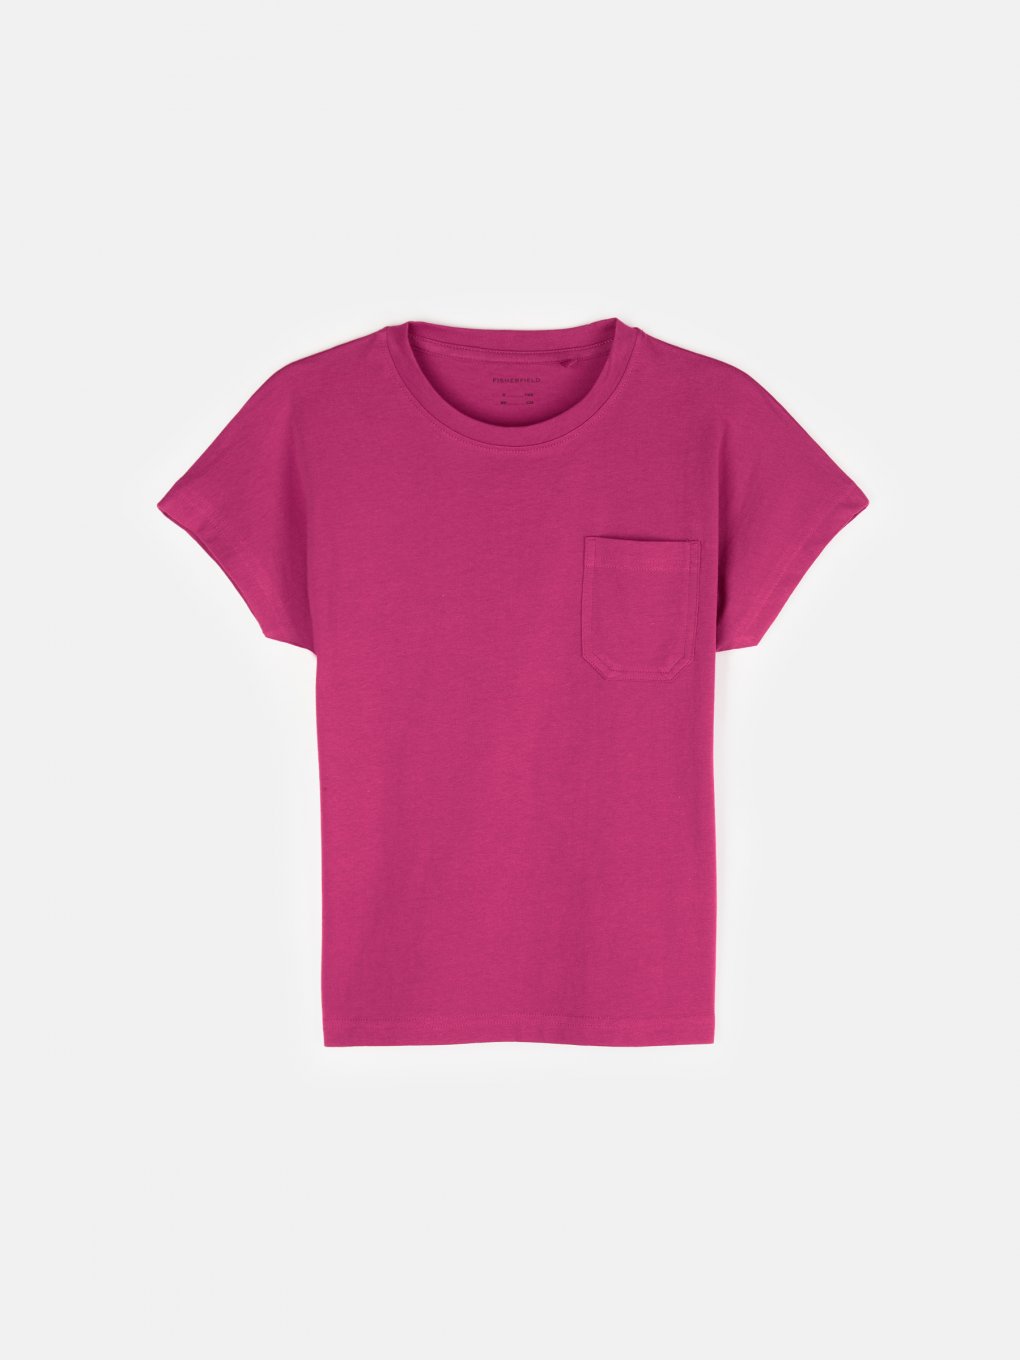 Basic cotton longline t-shirt with pocket